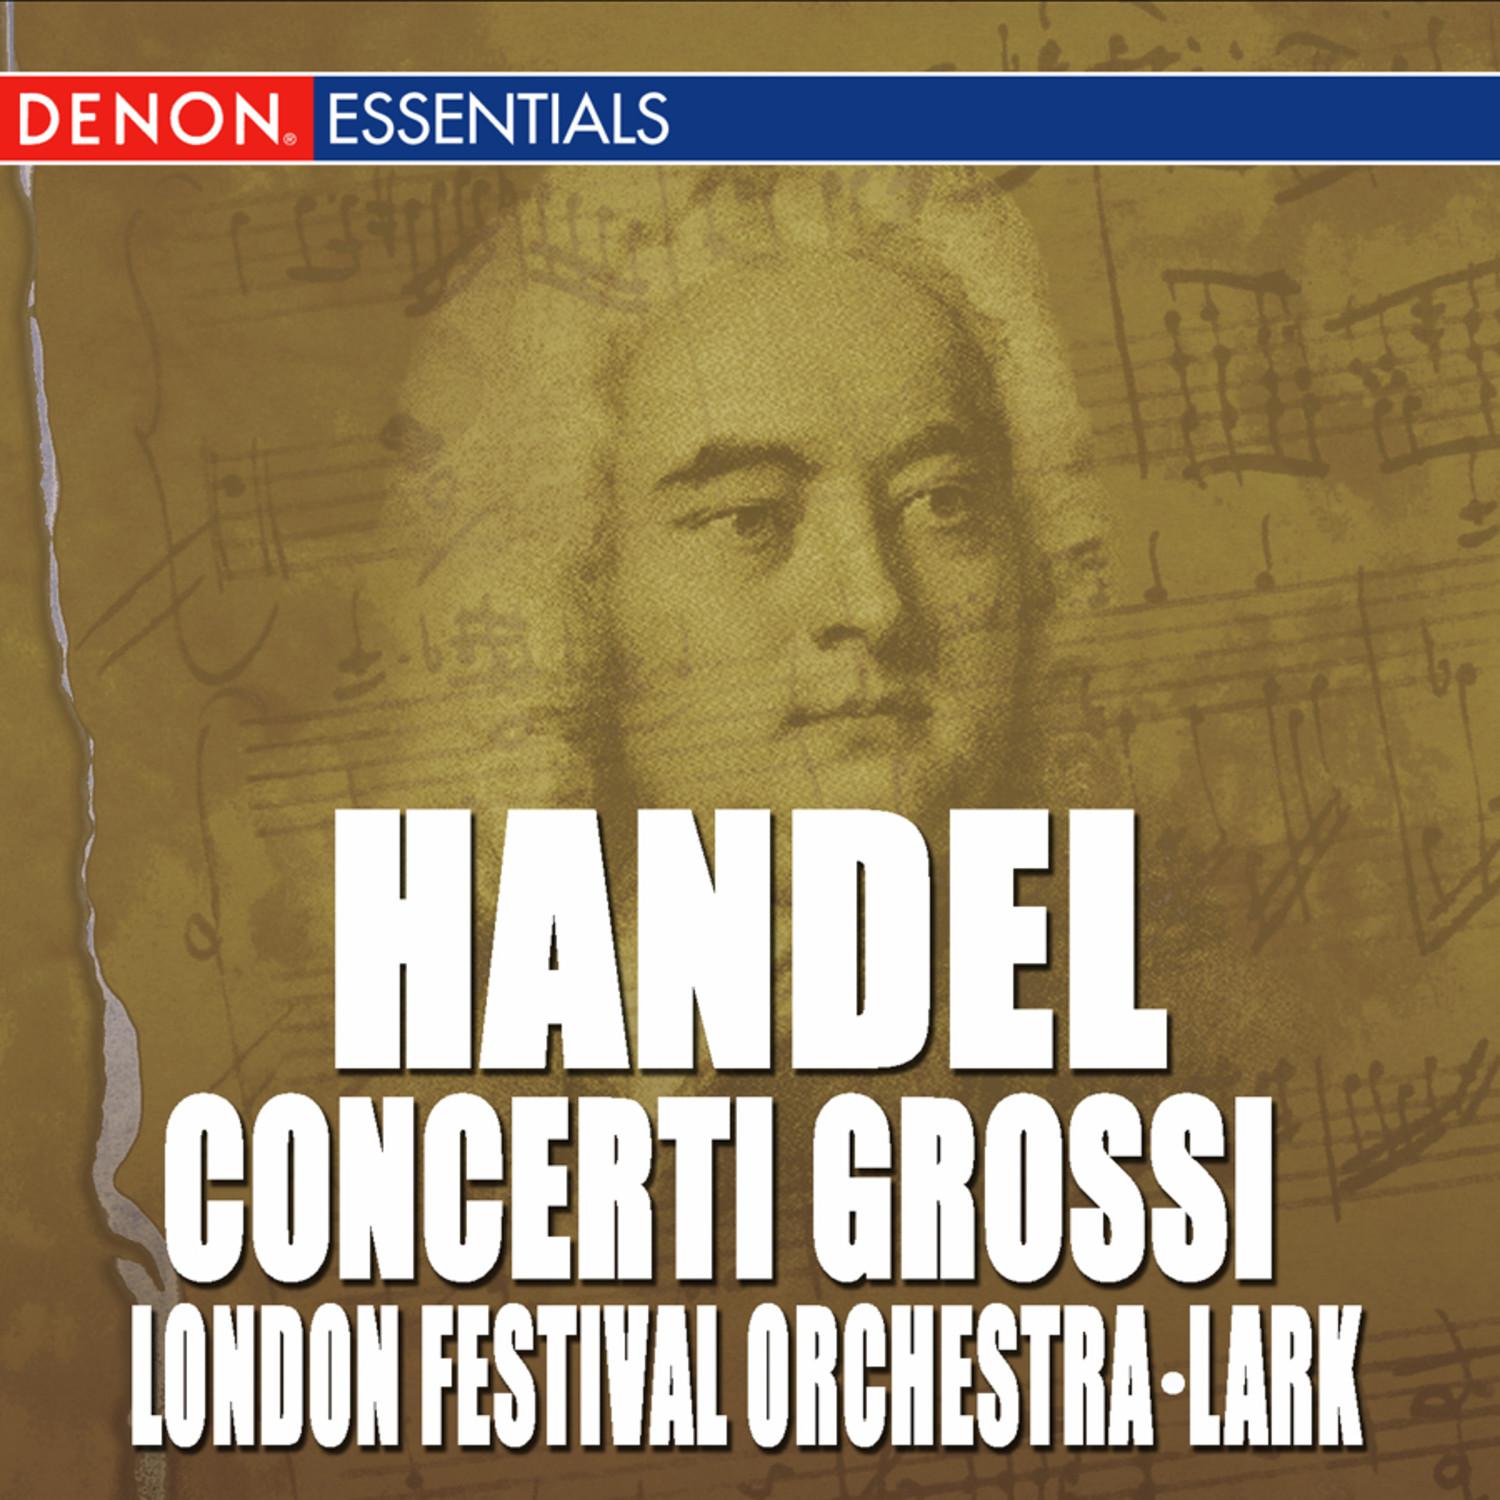 Concerto Grosso Op. 6, No. 1 in G Major: Allegro